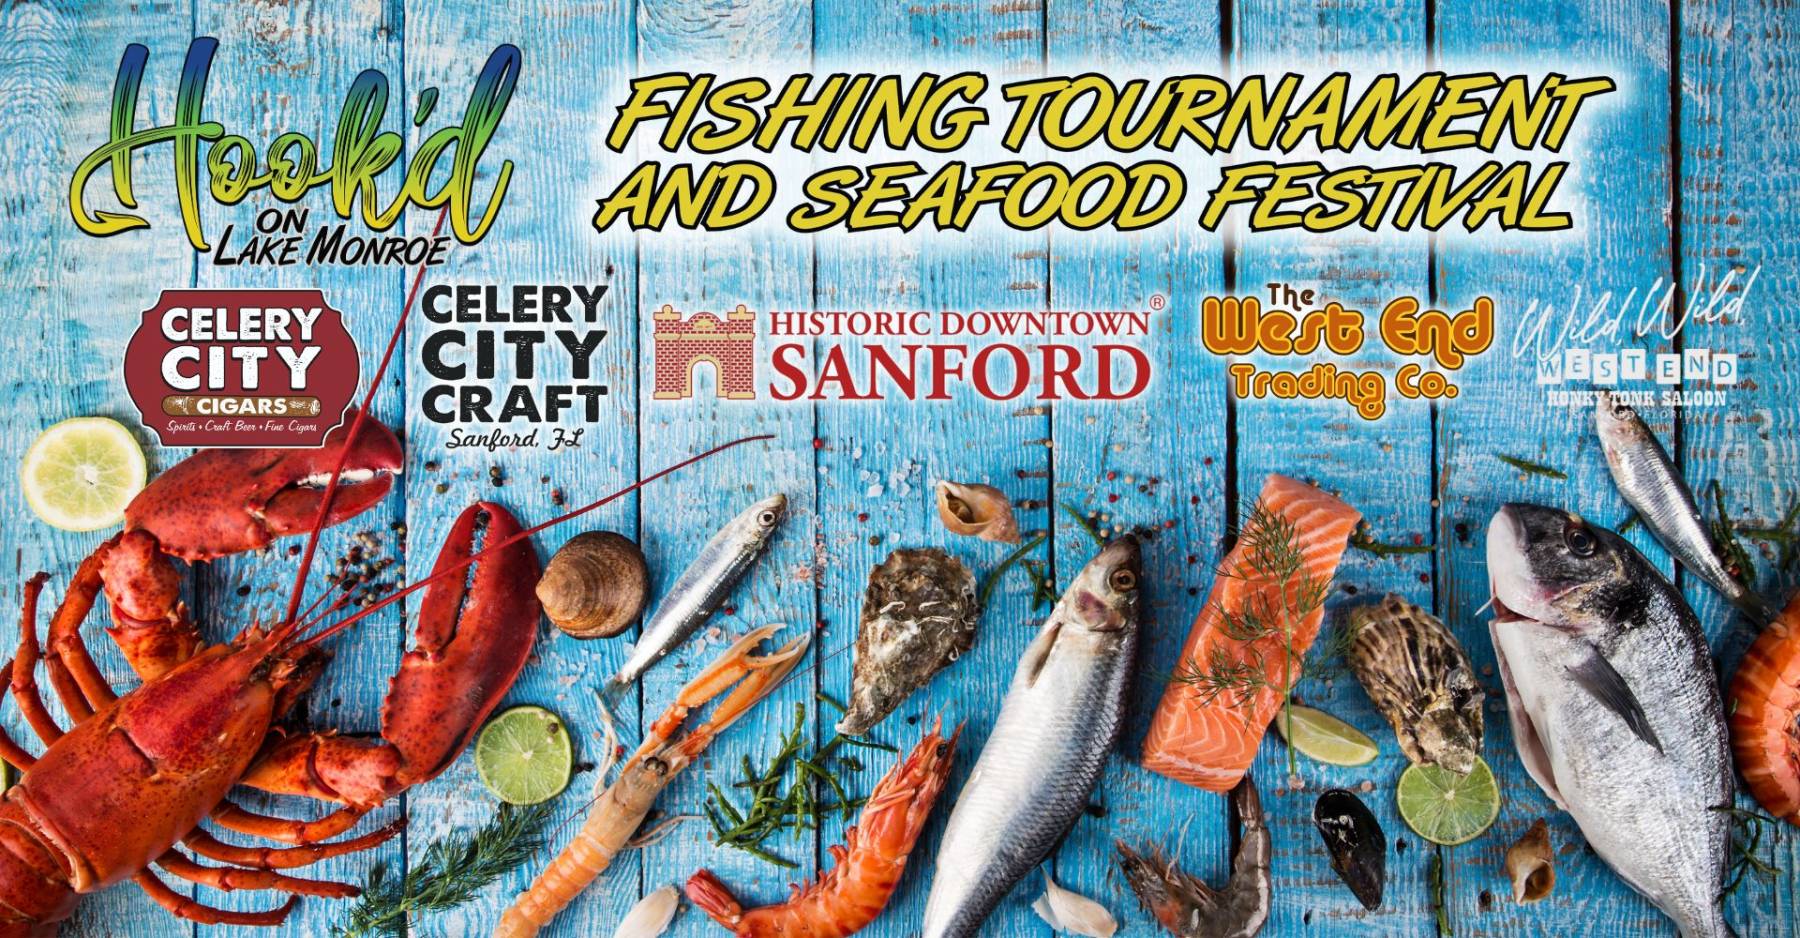 Get Hook'd Seafood Festival & Tournament